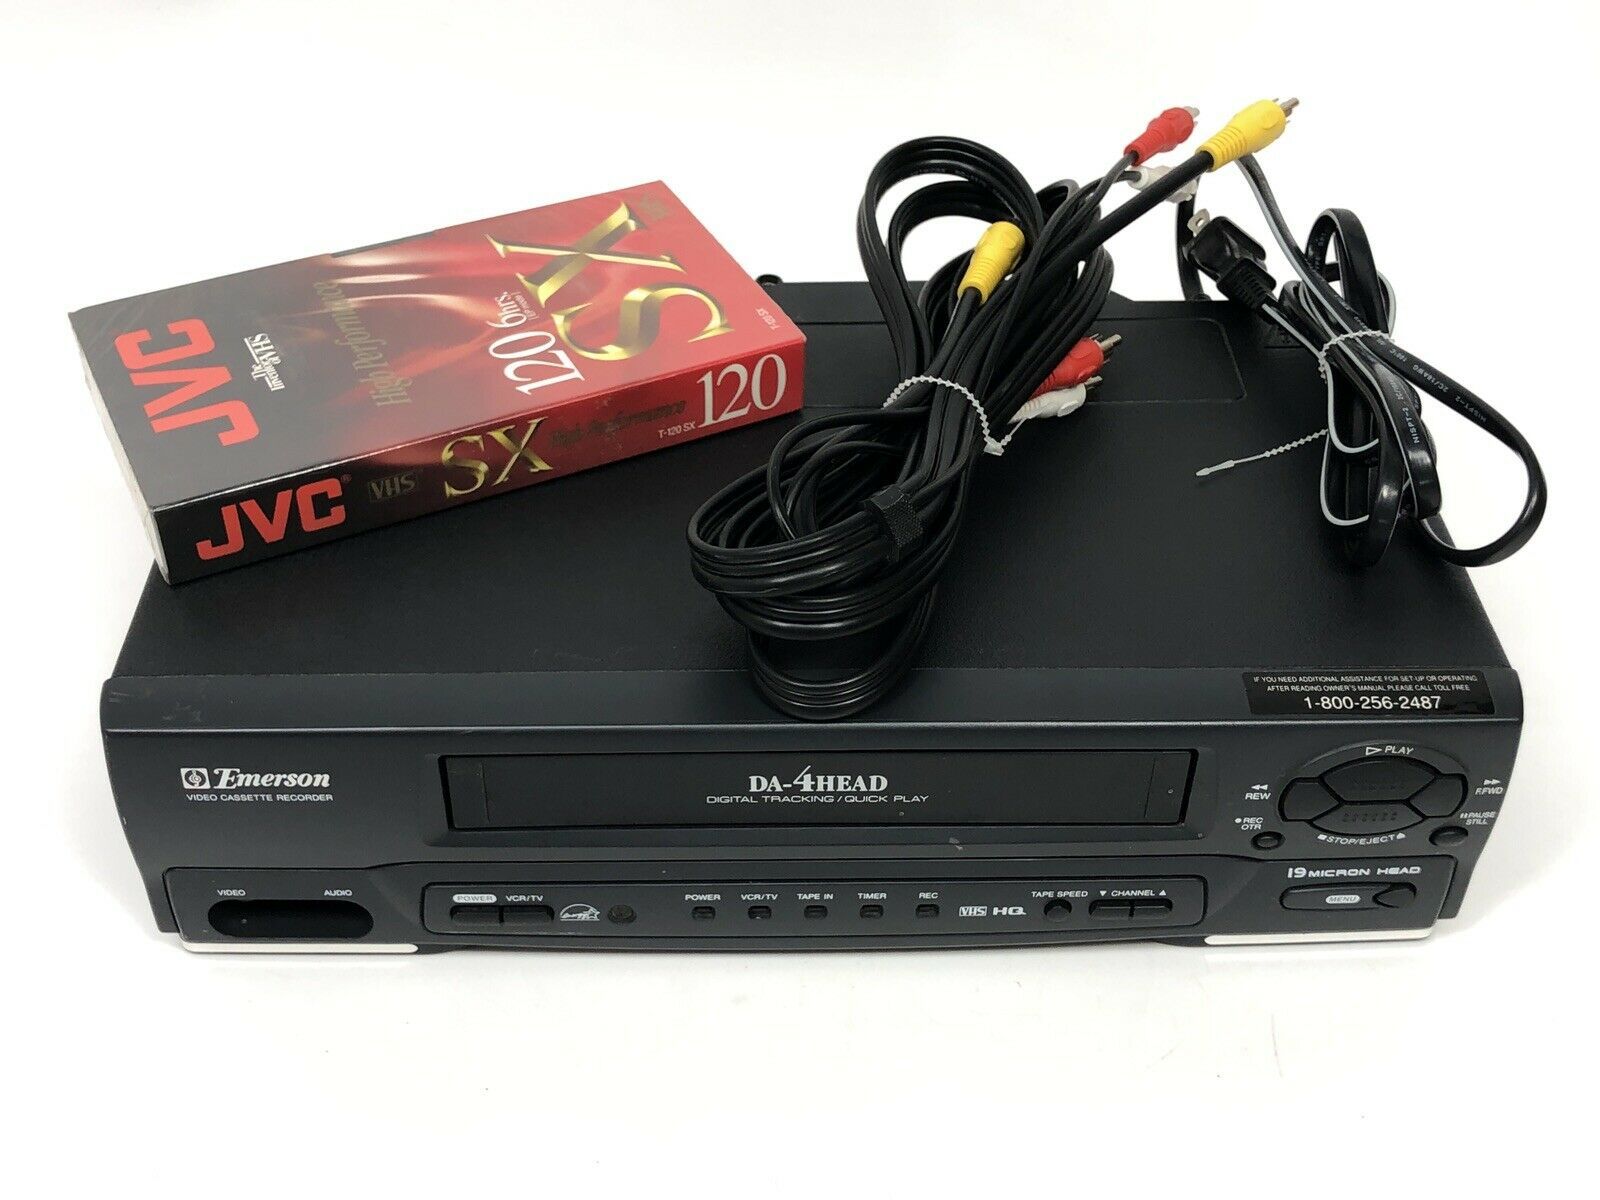 Emerson EWV401A DA-4 Head Quick Play VCR/VHS Player *No Remote* TESTED WORKS - $55.05